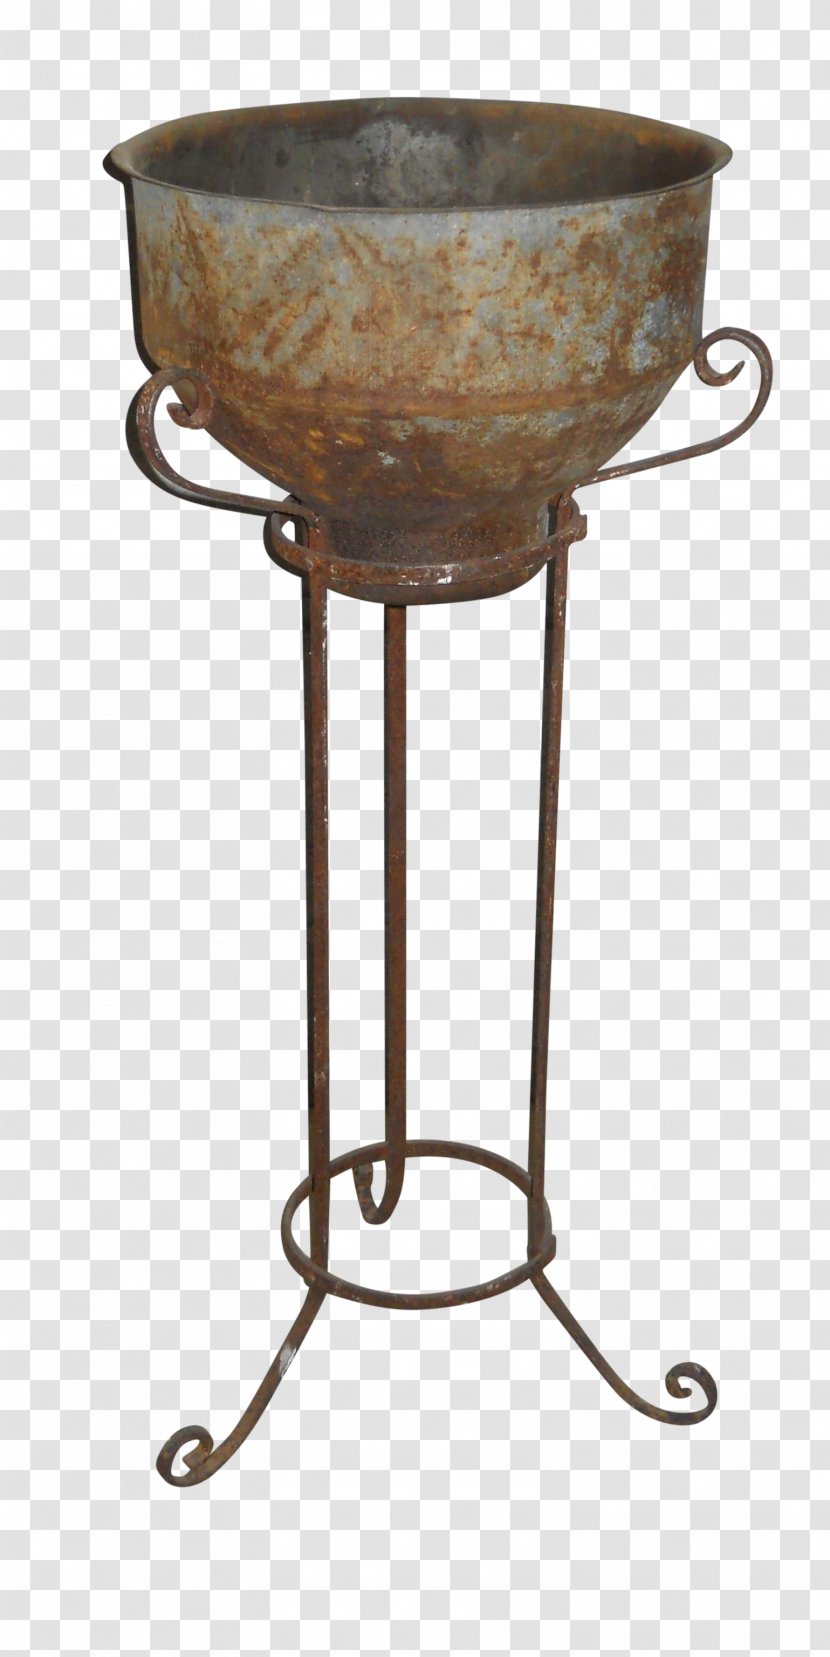 Table M Lamp Restoration - Furniture - Rustic Flower Pot Stands Transparent PNG